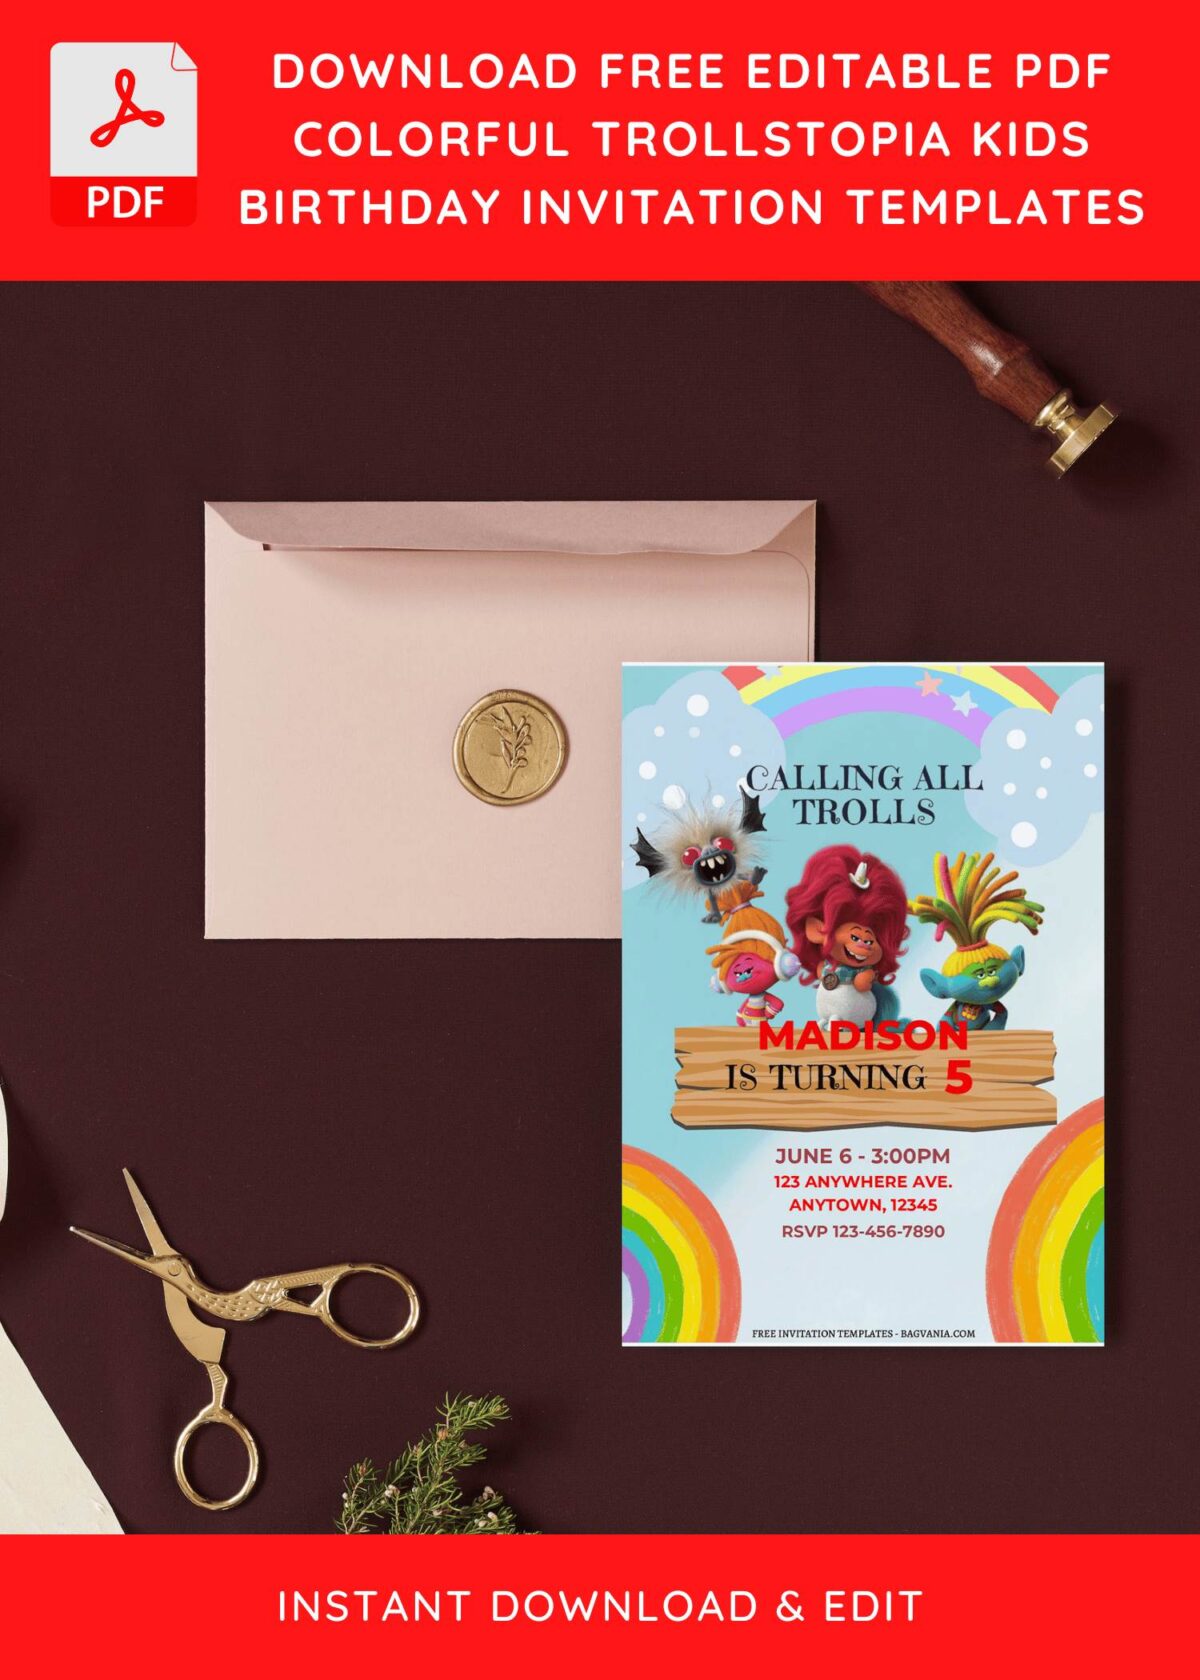 (Free Editable PDF) Rainbow Trollstopia Birthday Invitation Templates I